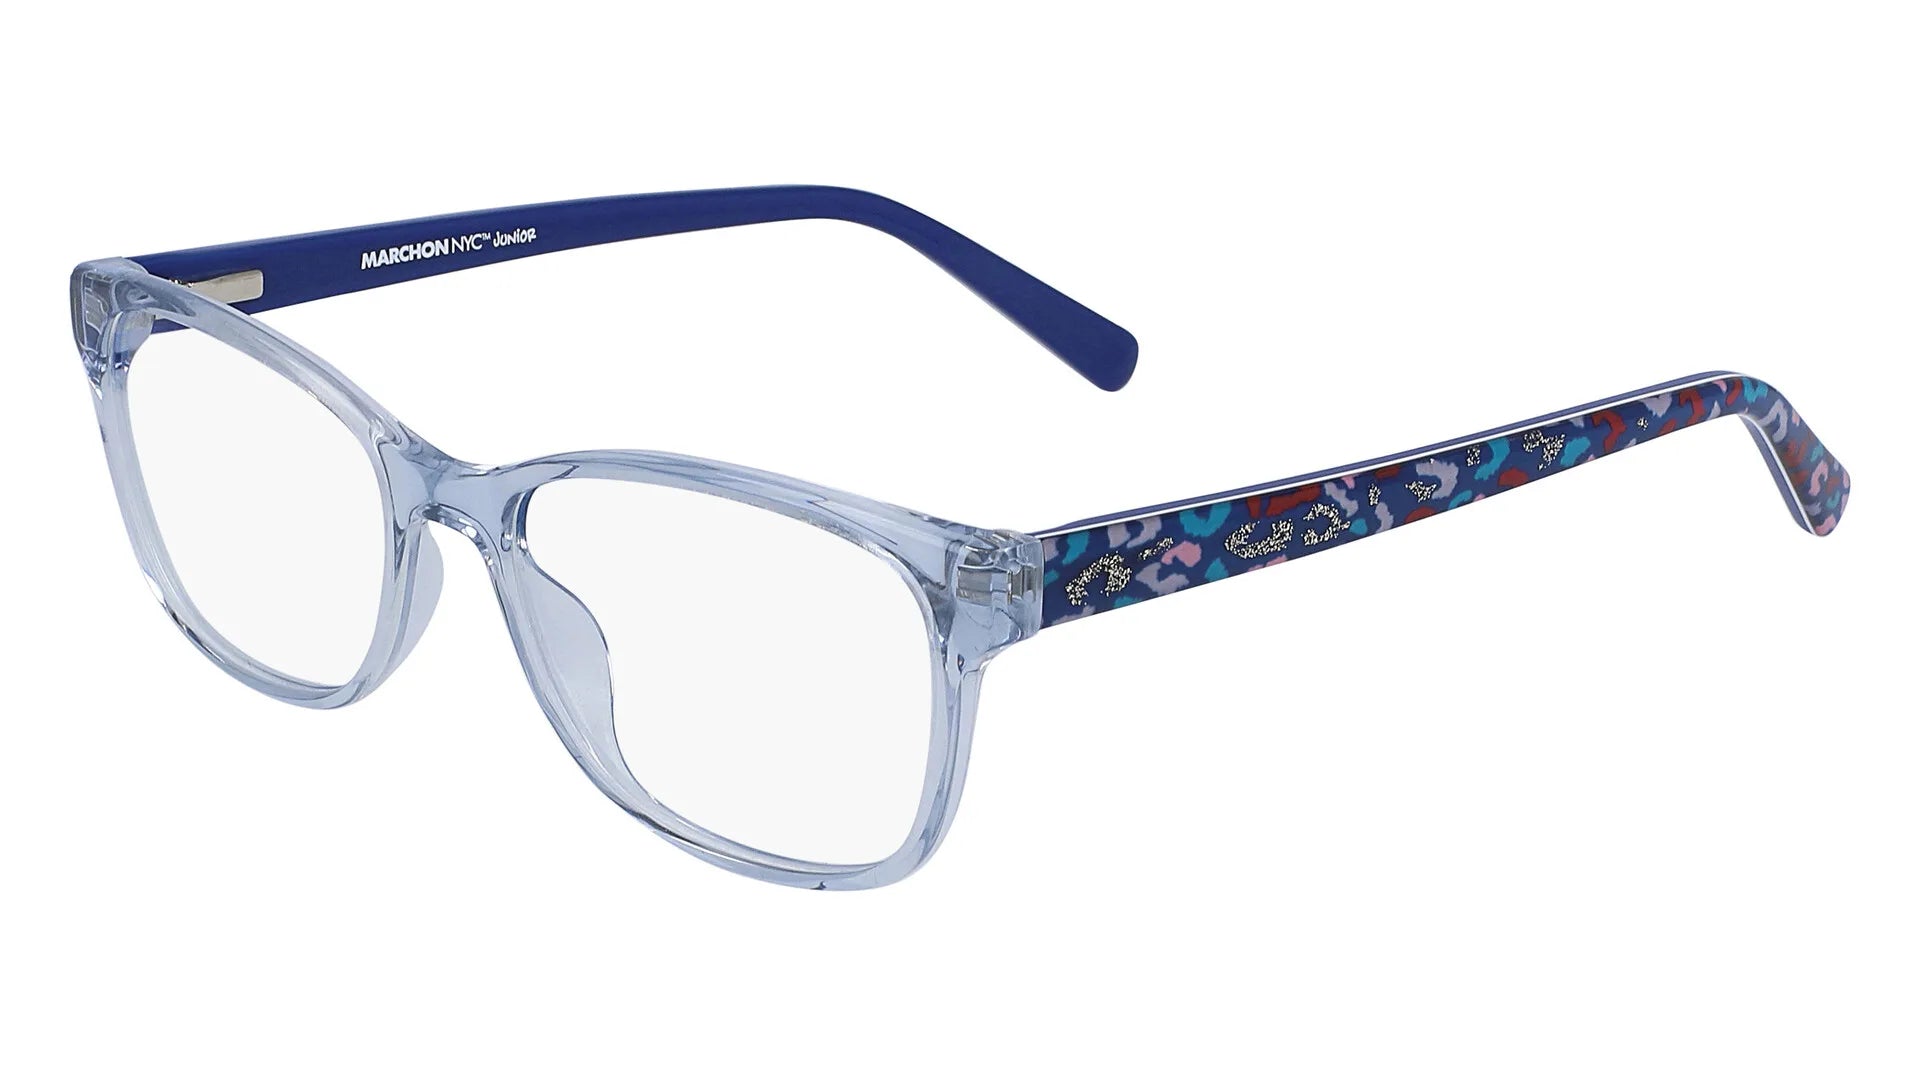 Marchon NYC M-7502 Eyeglasses Light Blue